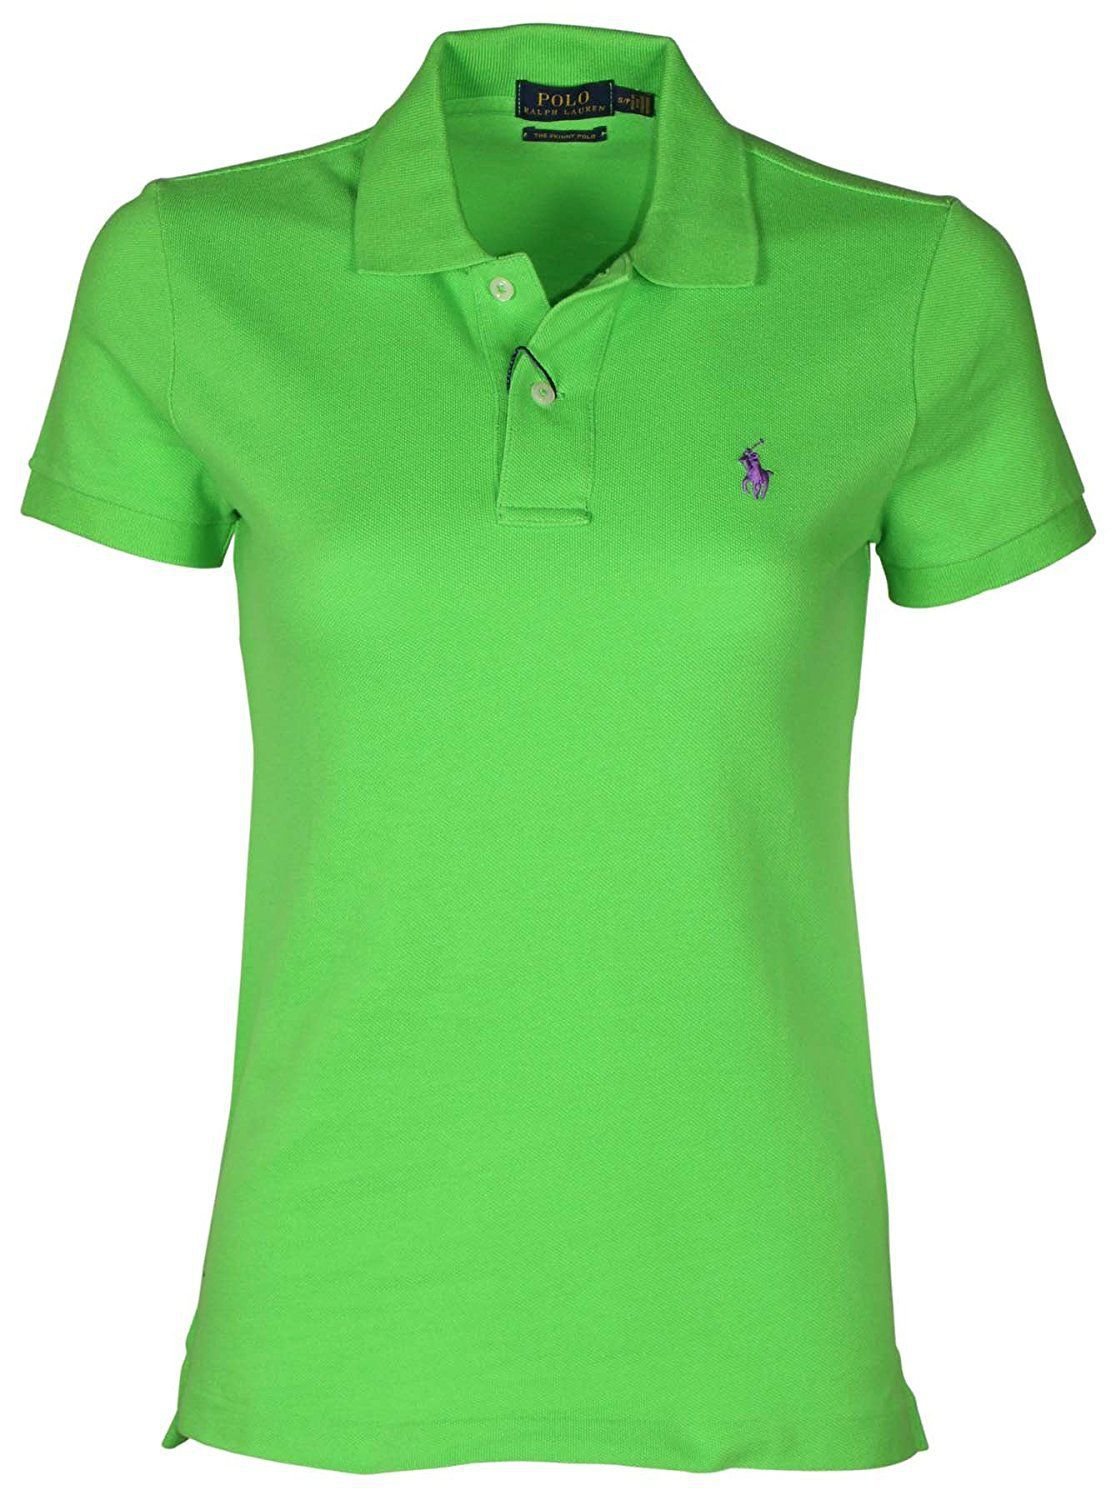 Polo Ralph Lauren Womens The Skinny Fit Mesh Polo Shirt Green S L XL